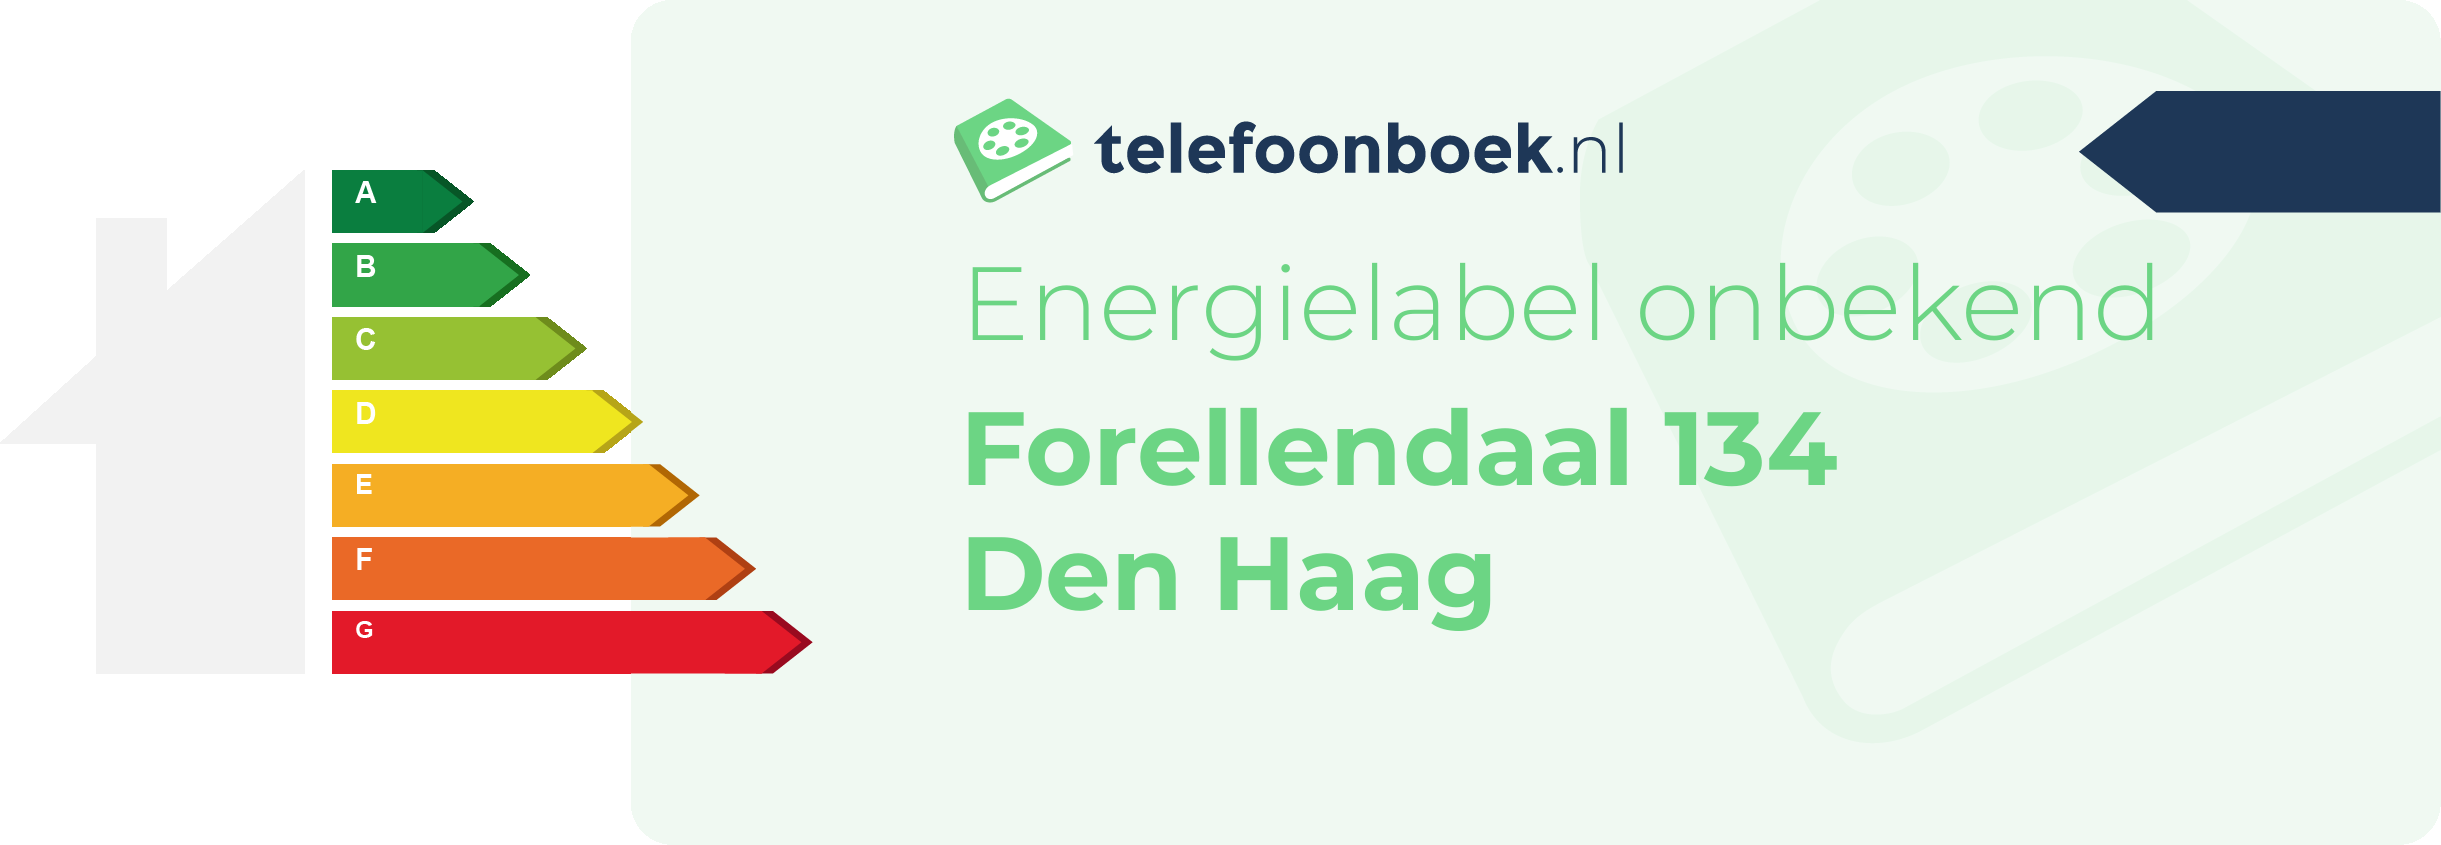 Energielabel Forellendaal 134 Den Haag